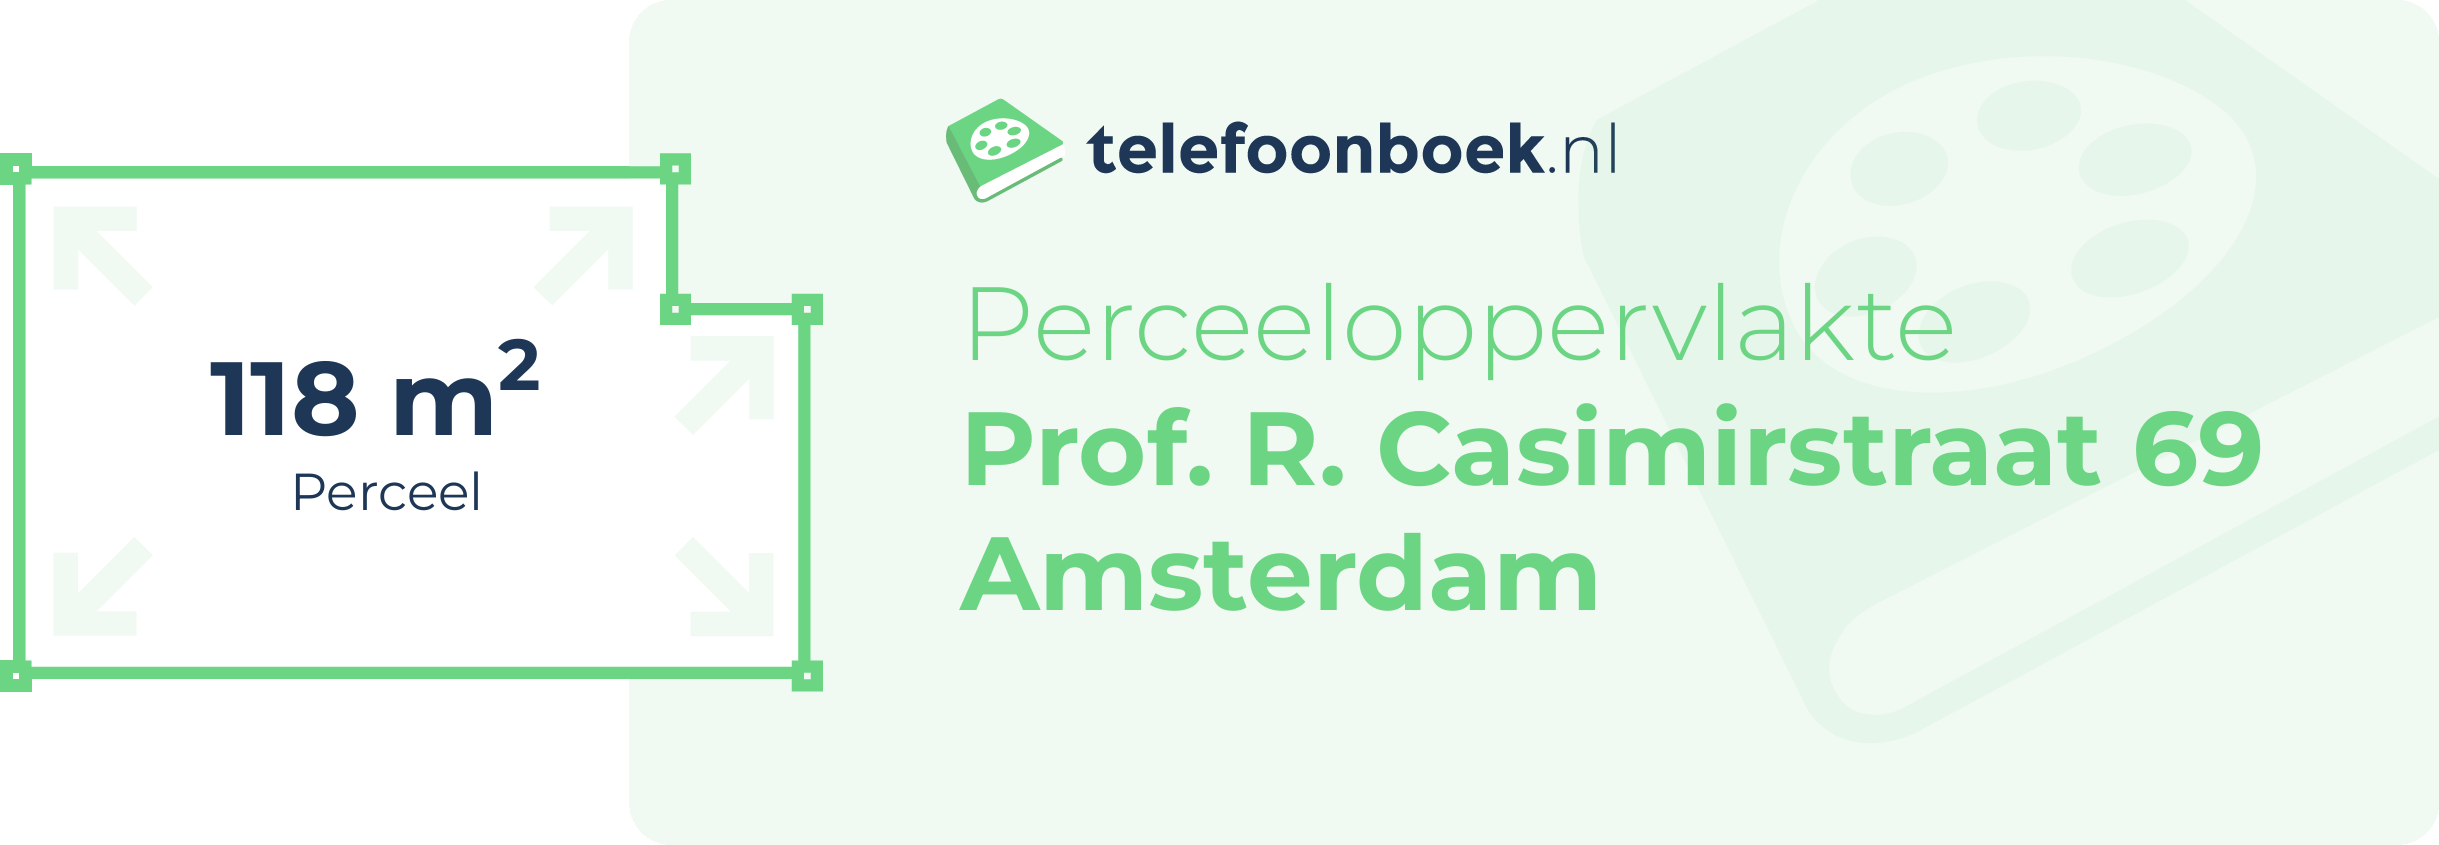 Perceeloppervlakte Prof. R. Casimirstraat 69 Amsterdam